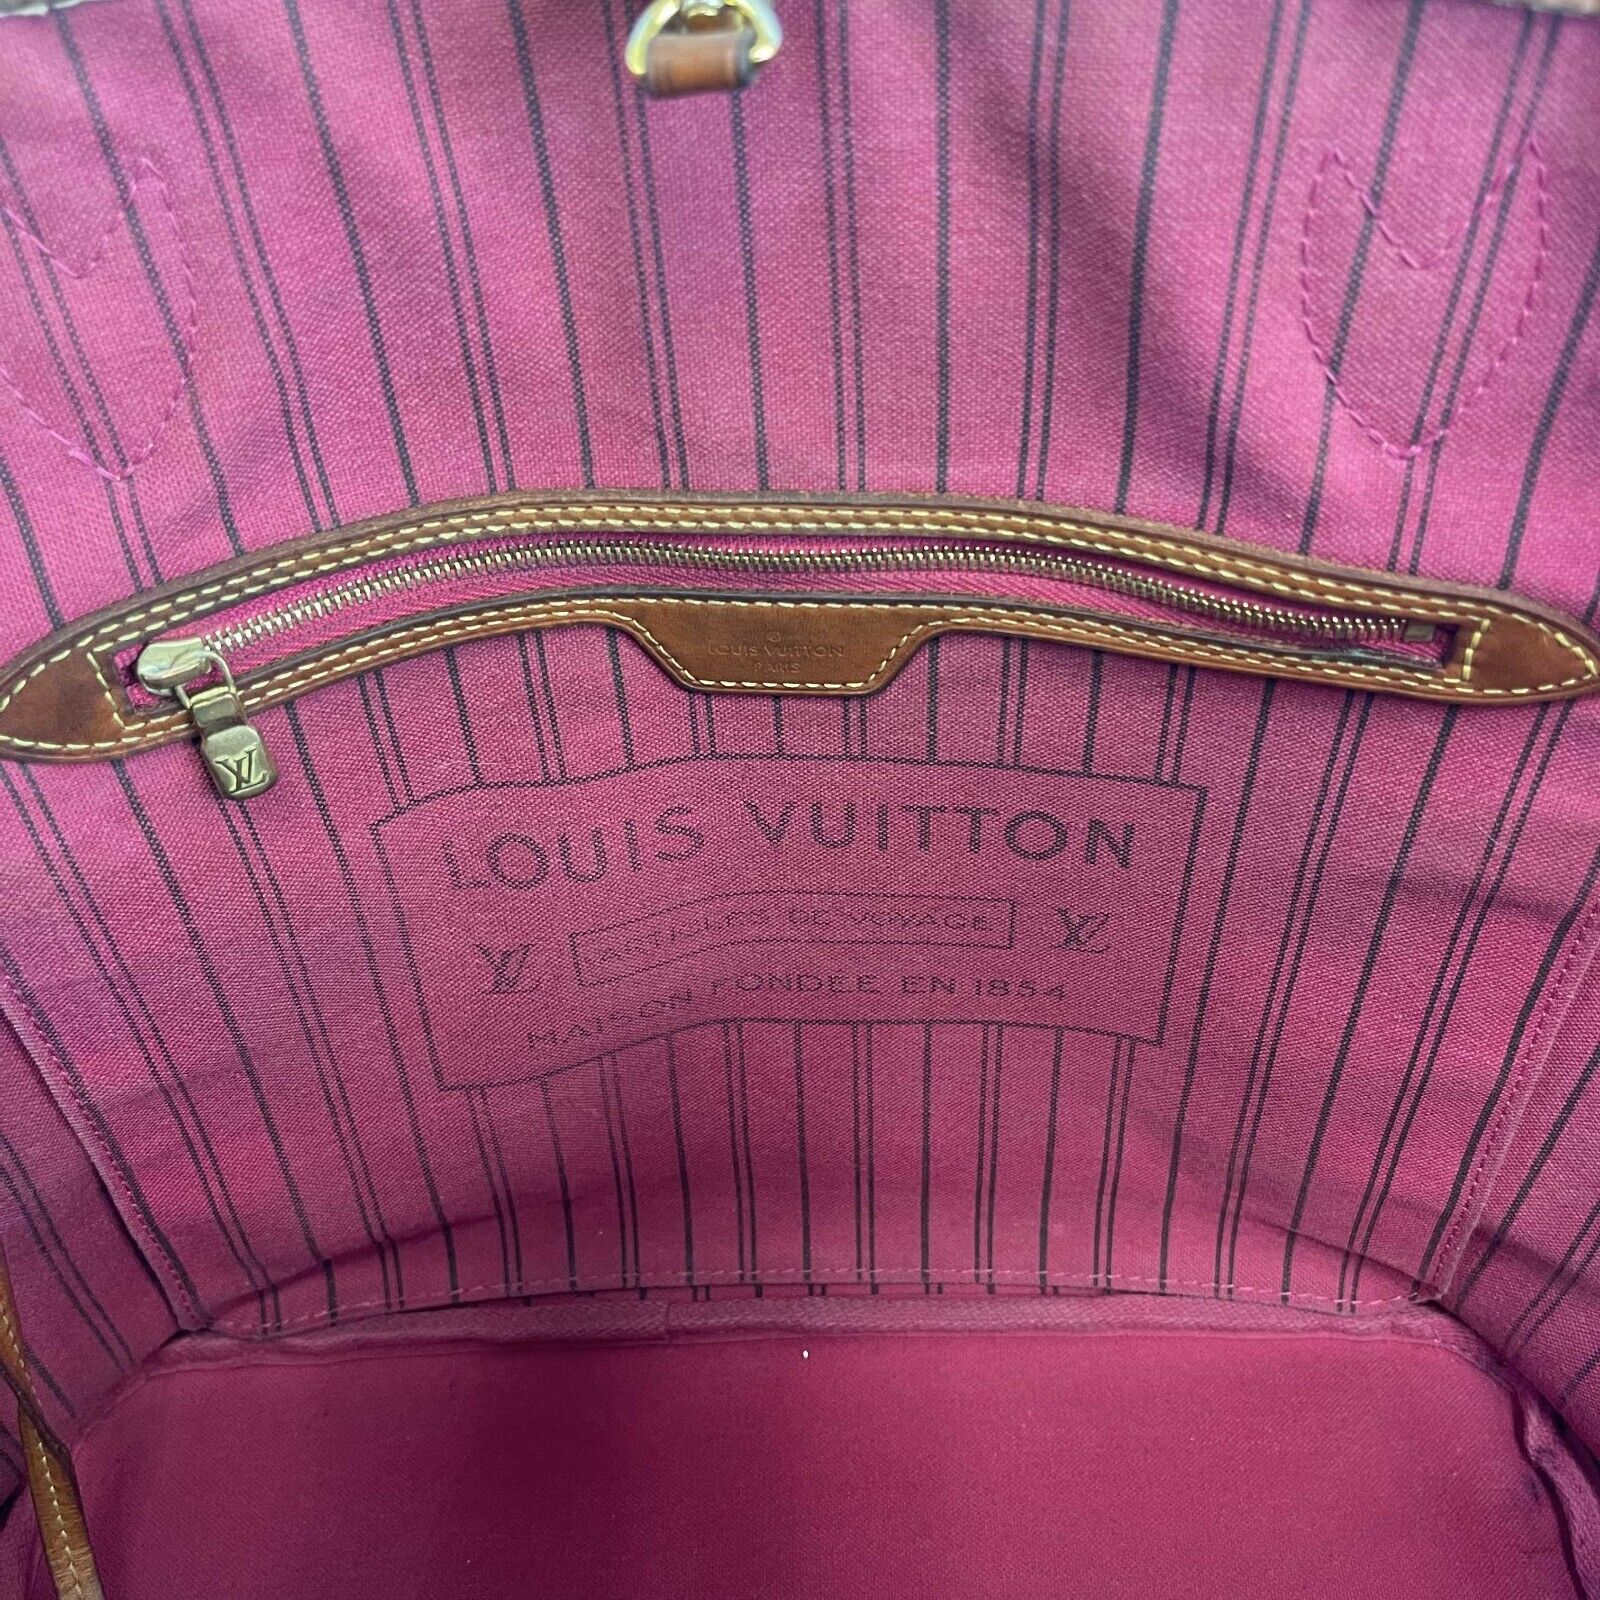 inside louis vuitton bag pink